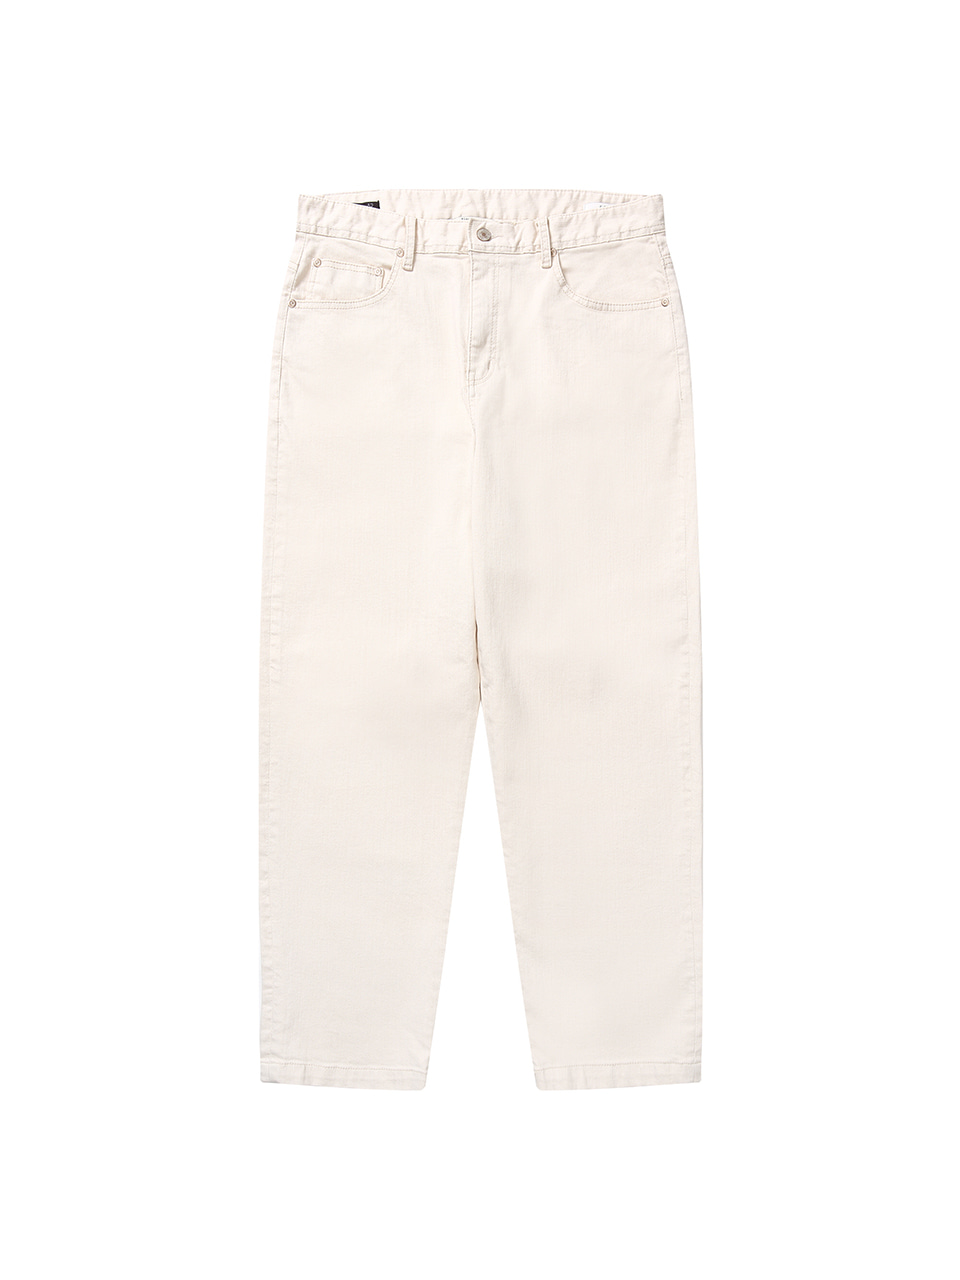 Tapered Denim Pants Cream PJ2203블랙브라운